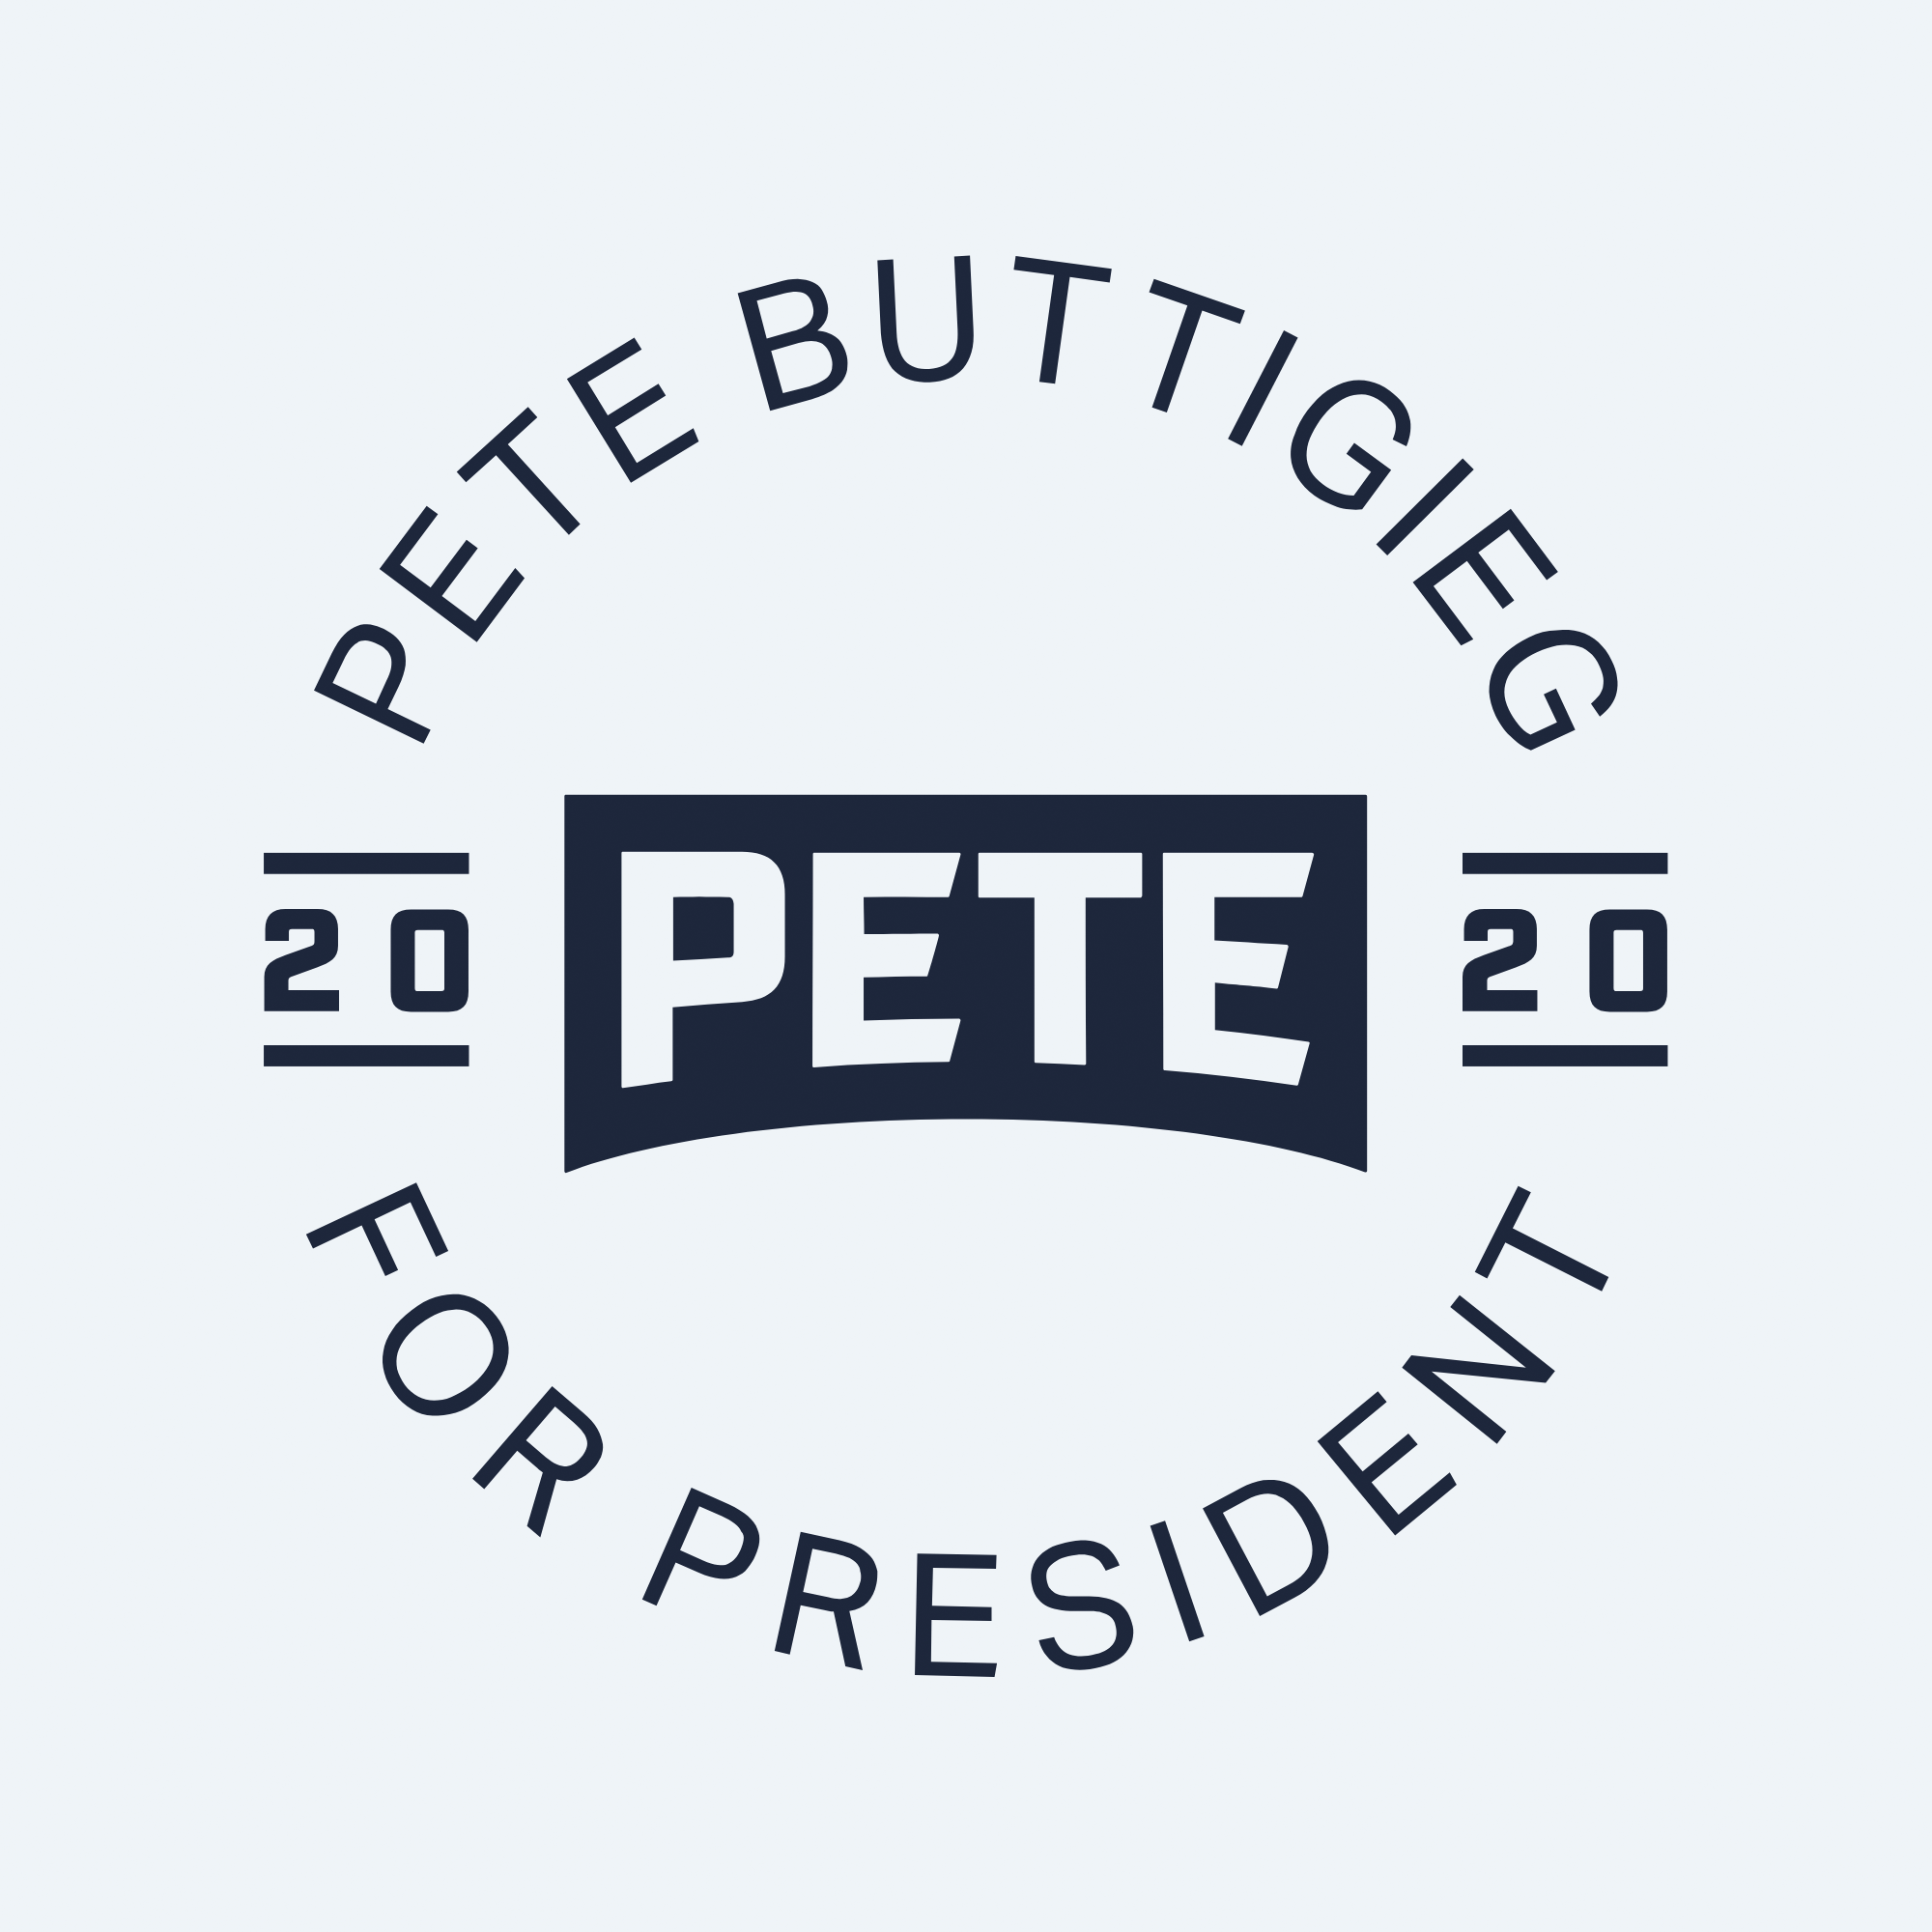 New Logo and Identity for Pete Buttigieg by Hyperakt